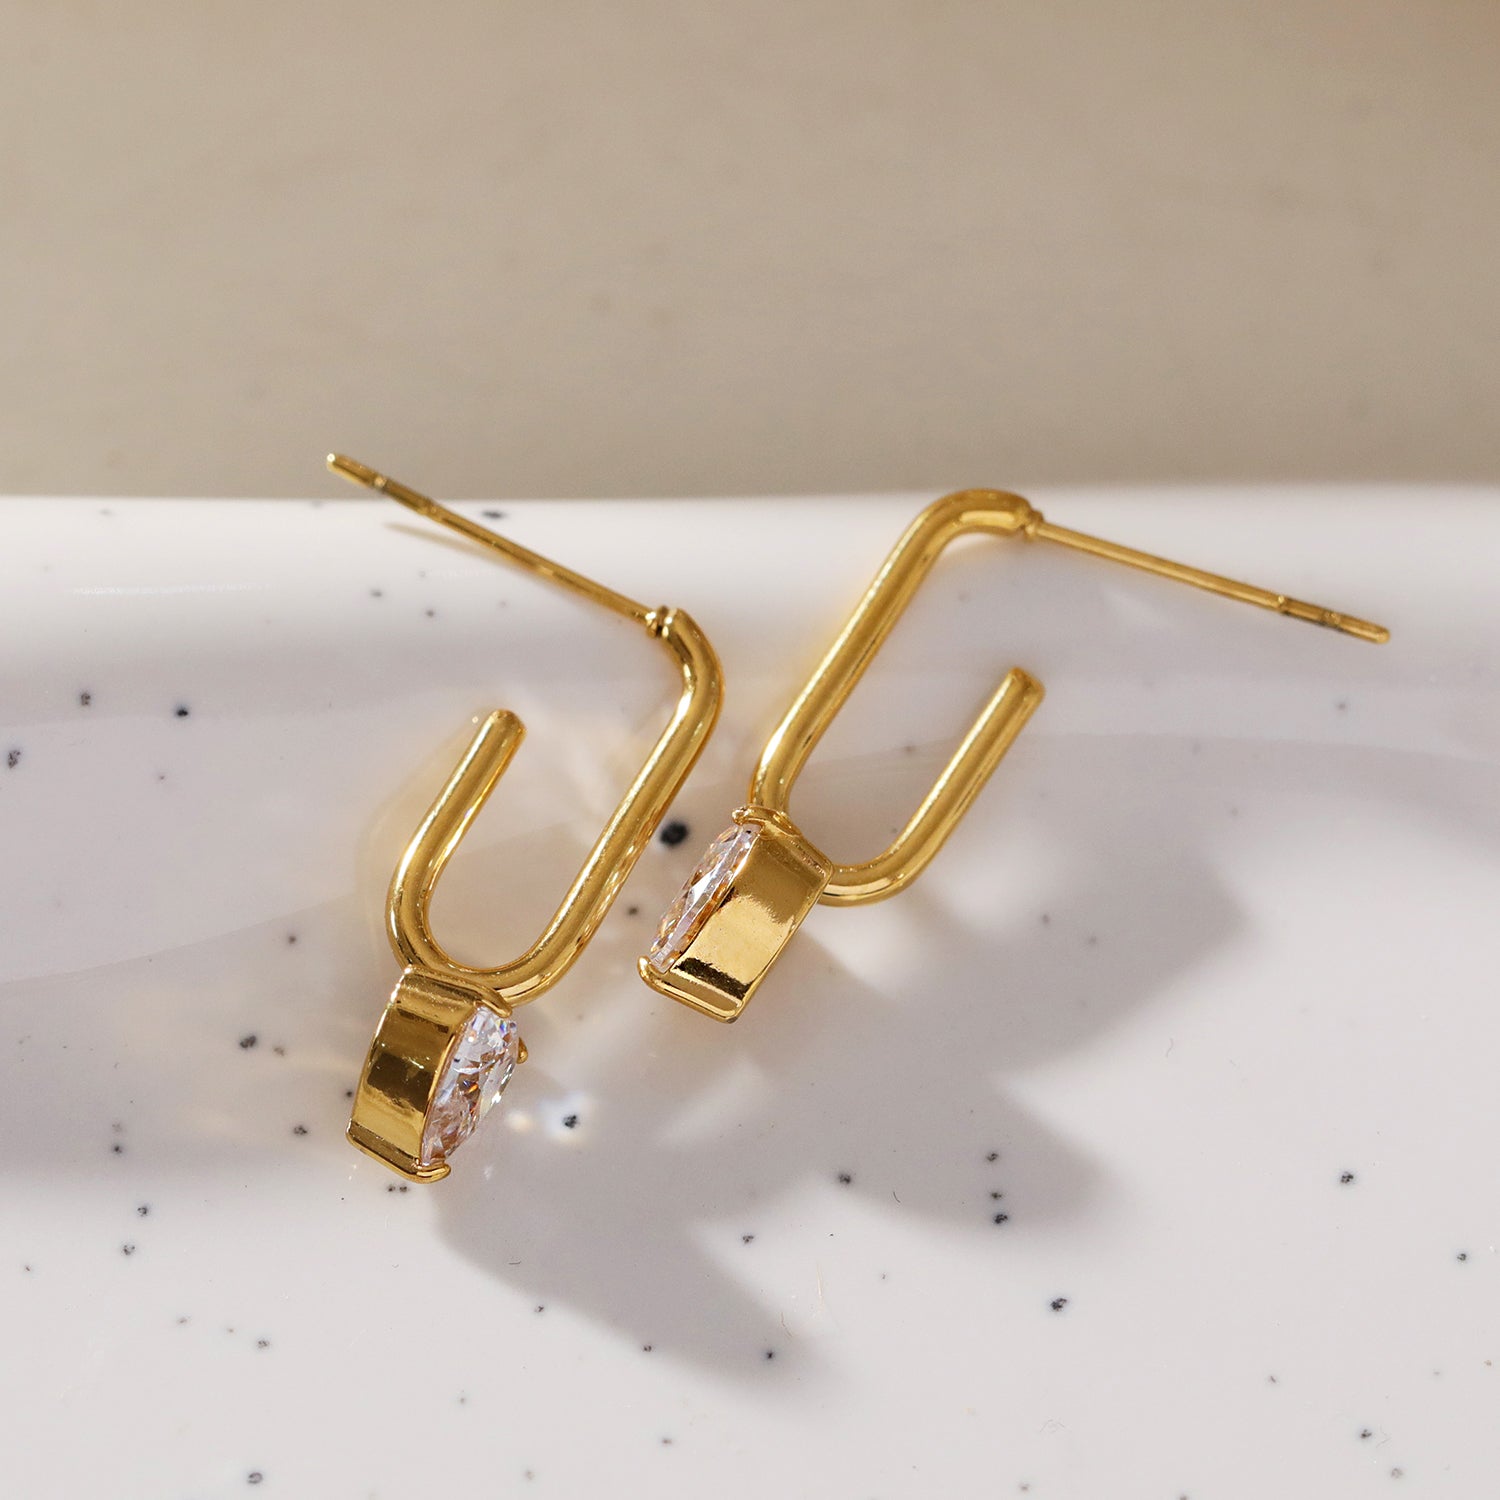 HACKNEY_NINE | Style ARETE 92656: Timeless Romance - Heart Gemstone Paper-Clip Earrings.